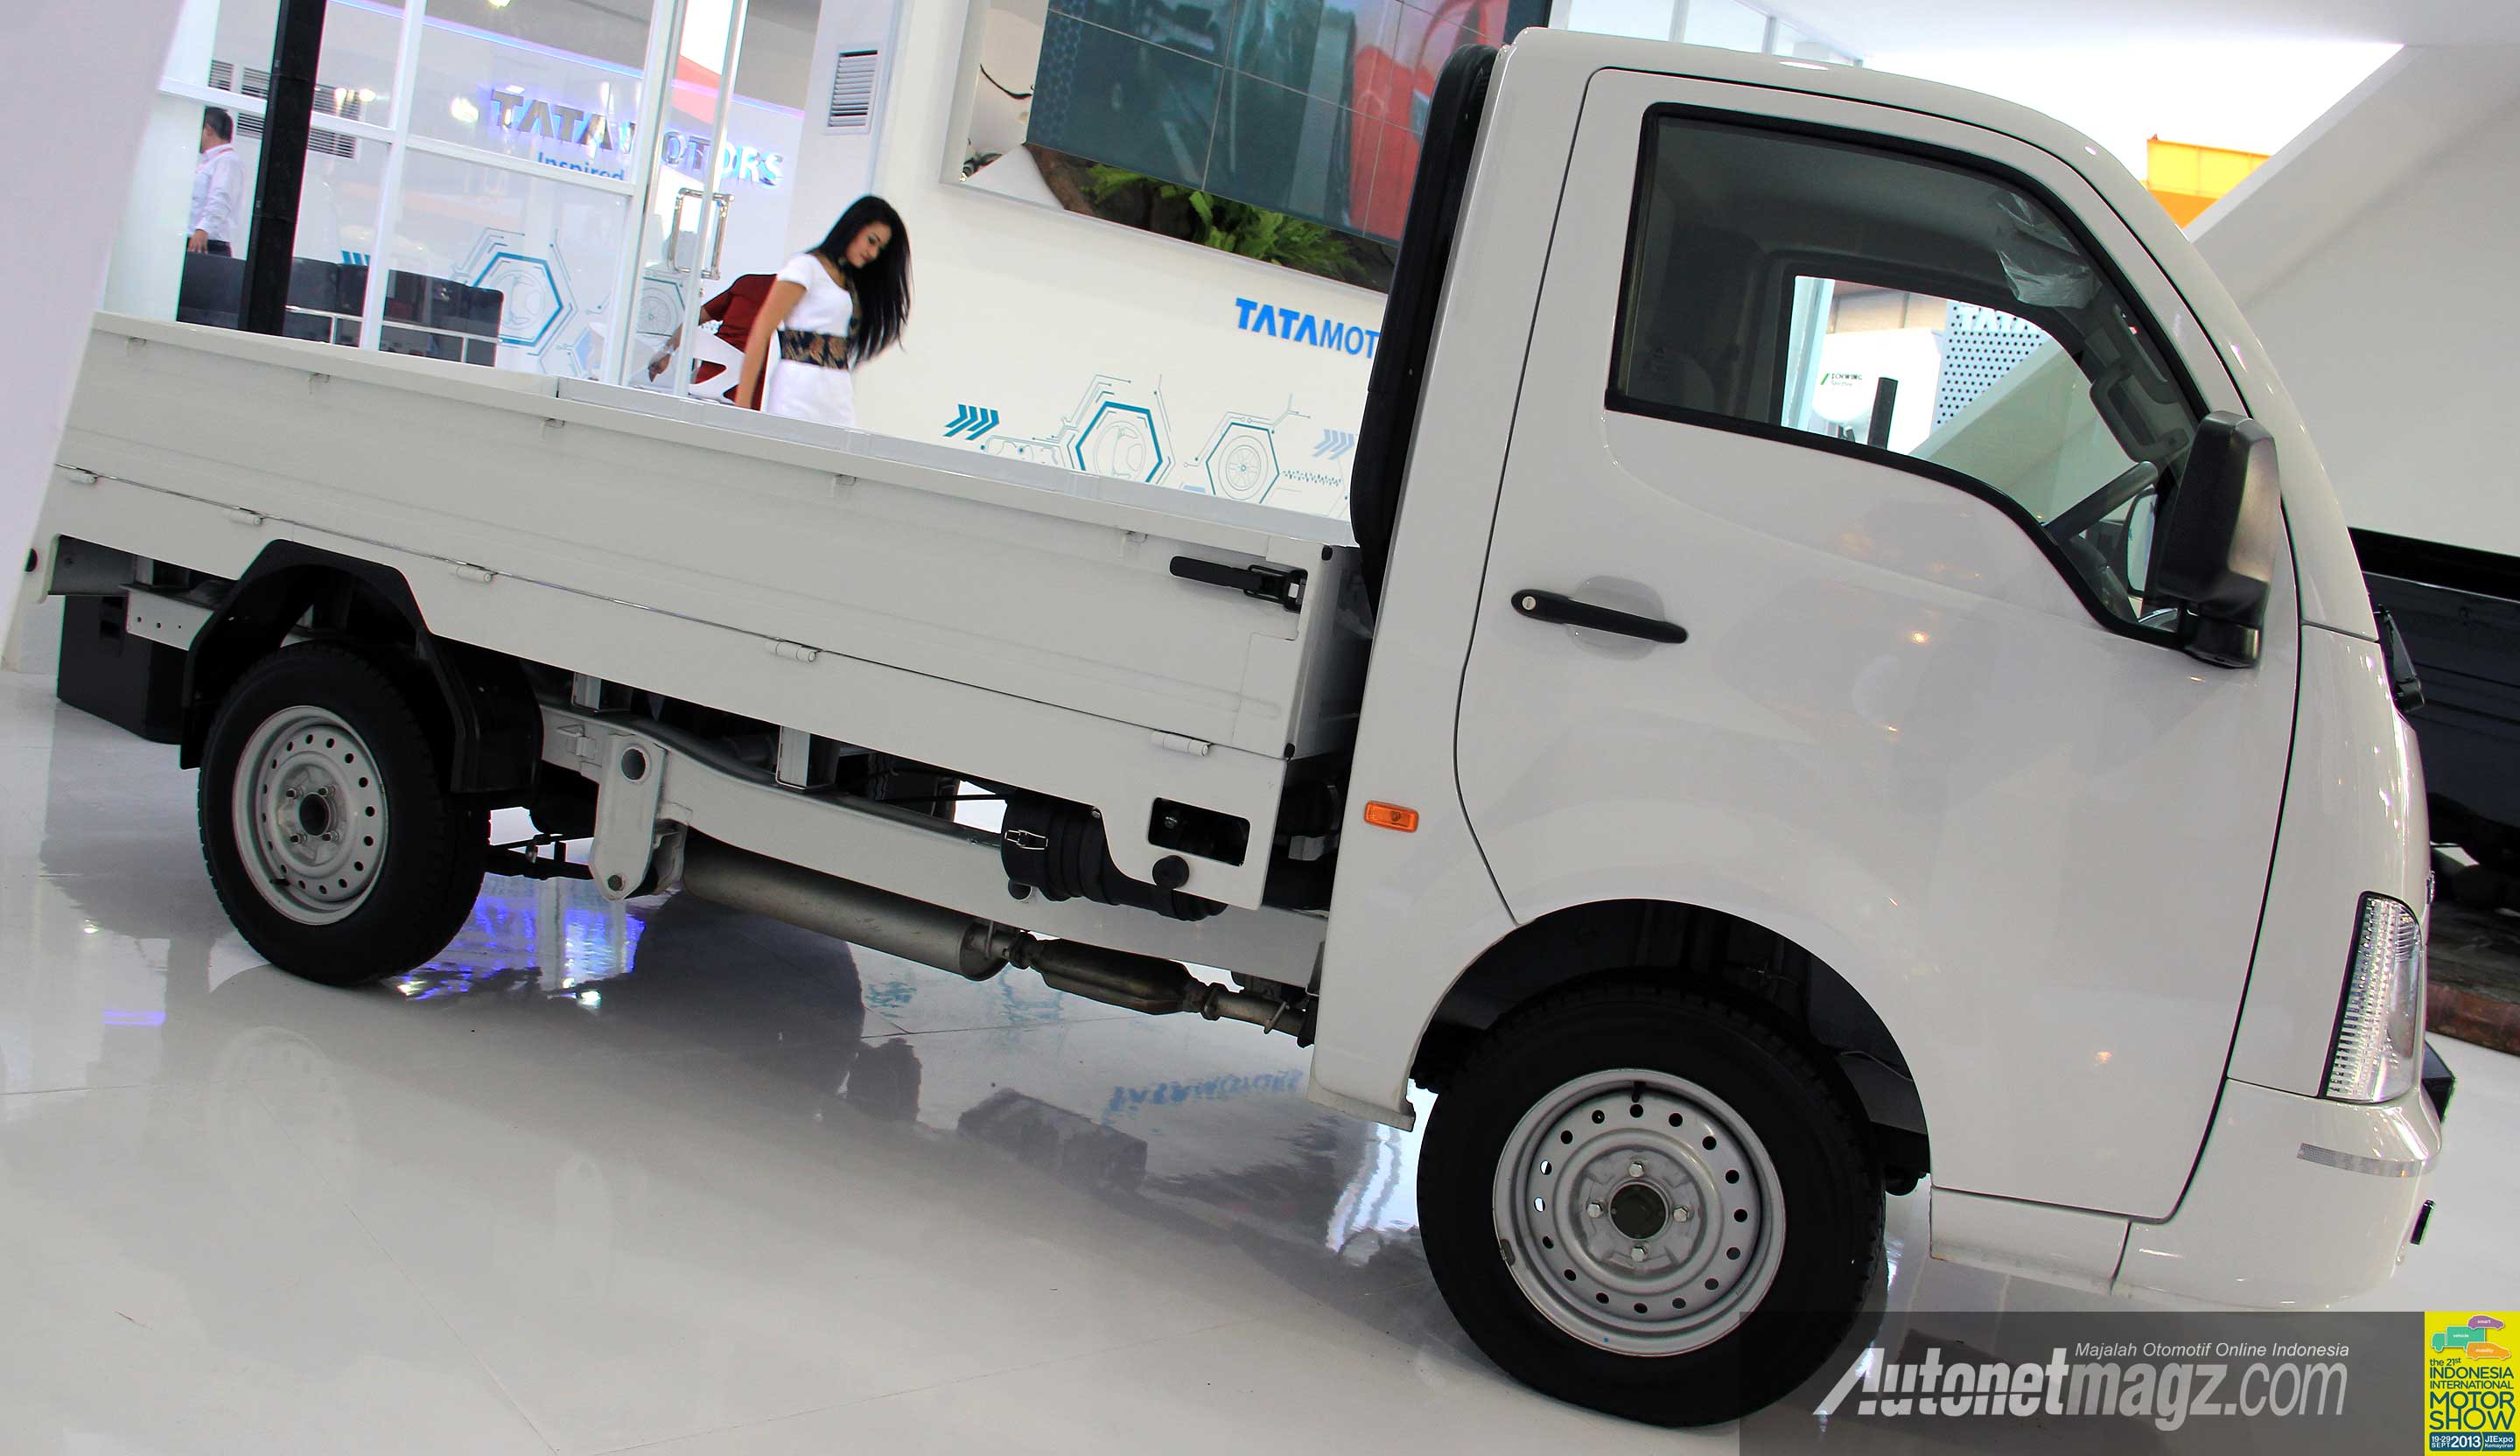 IIMS 2013, TATA Super Ace pickup: TATA Super Ace Disiapkan Untuk Mobil Niaga dan Angkot